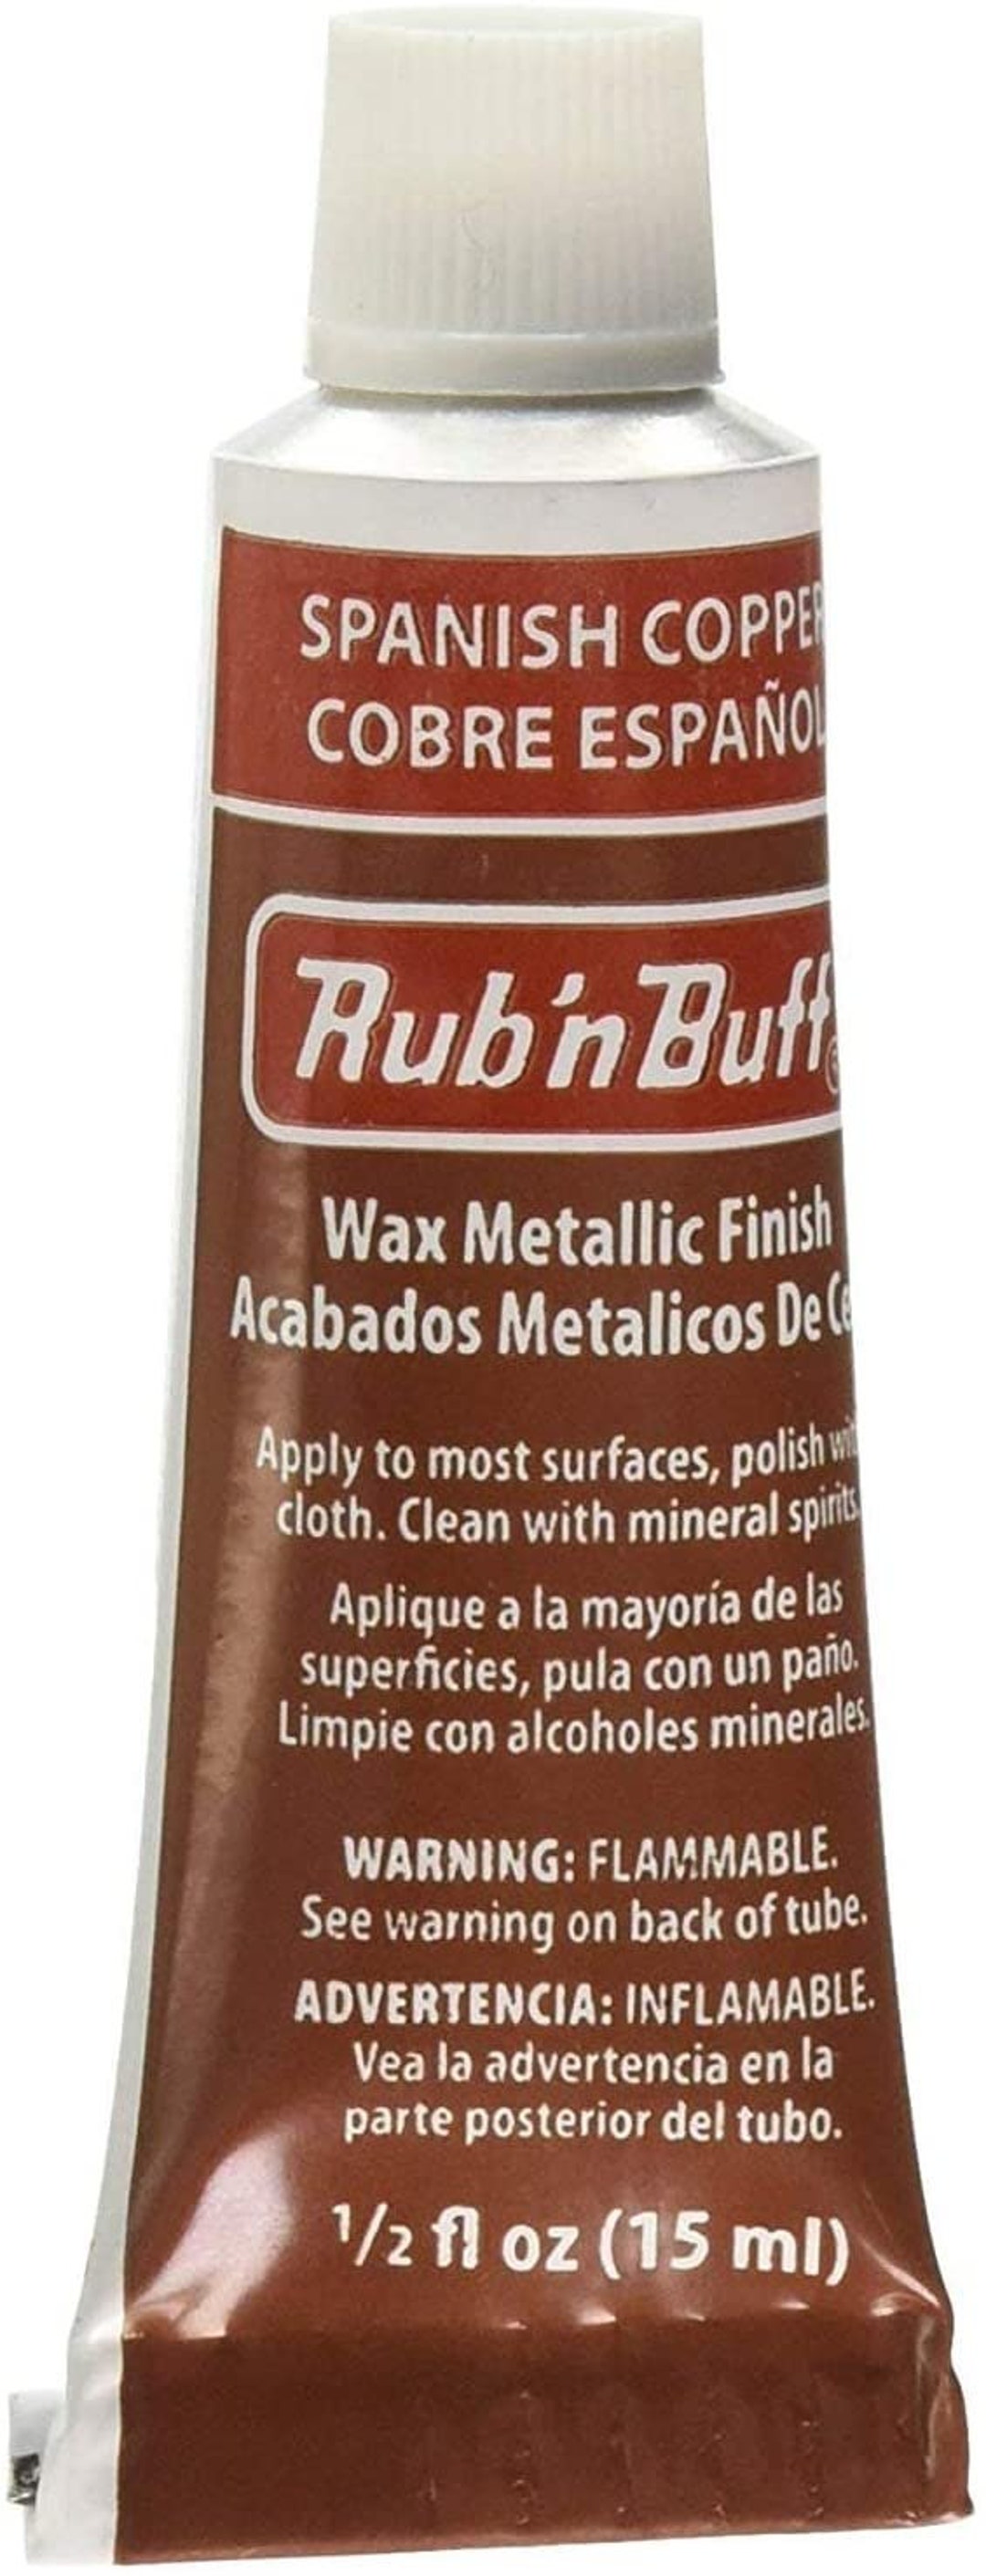 Amaco Rub 'N Buff Wax Metallic Finish, Pewter, 0.5-Fluid Ounce, 2 Pack 